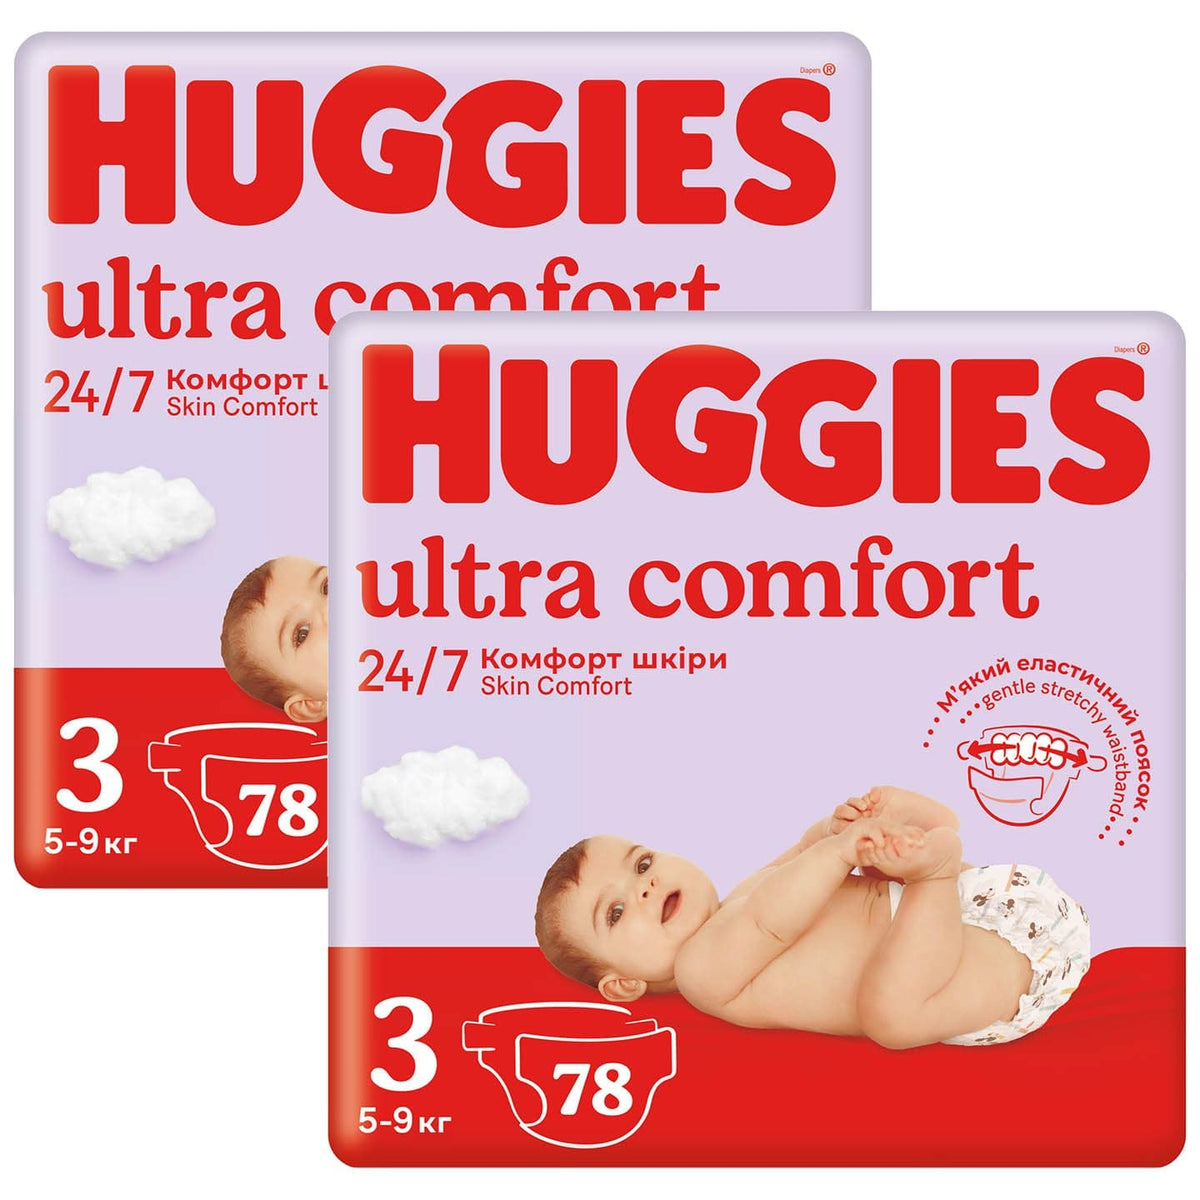 Produkt HUGGIES Pieluchy 2x Pieluchy HUGGIES Ultra Comfort rozmiar 3 (5-9kg) 78 szt K_032719_2